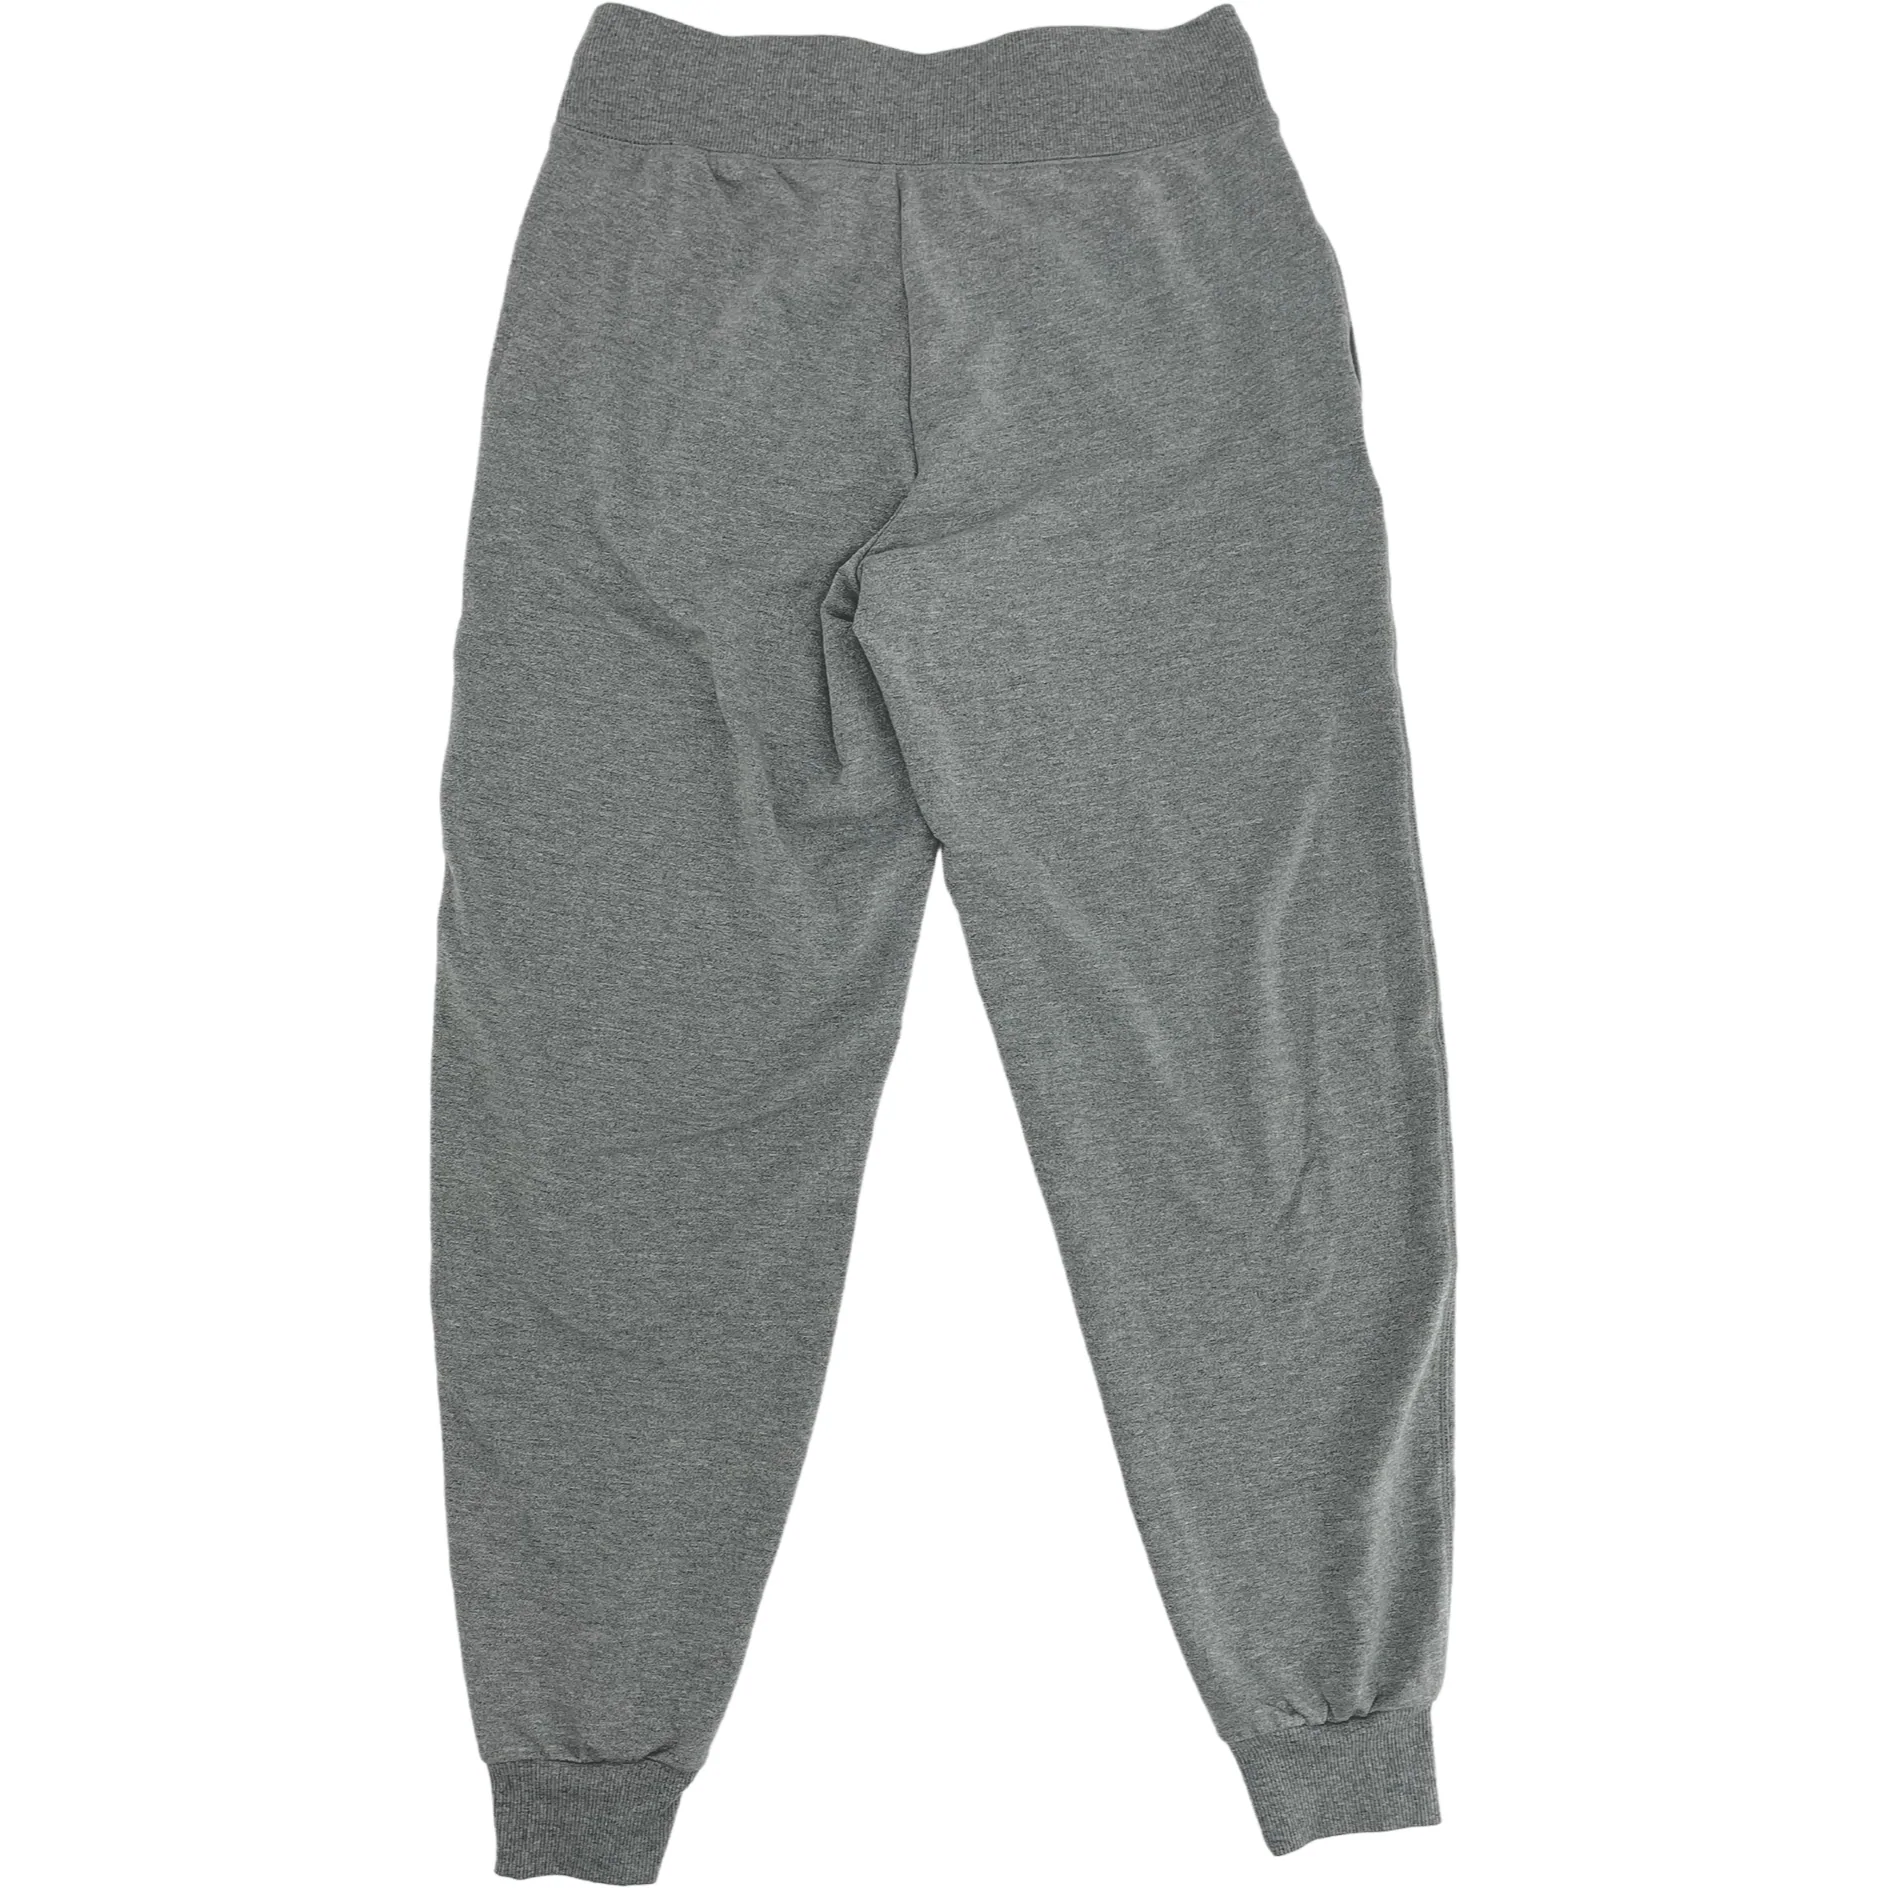 Tuff Athletics Women's Sweatpants / Light Grey / Size Small